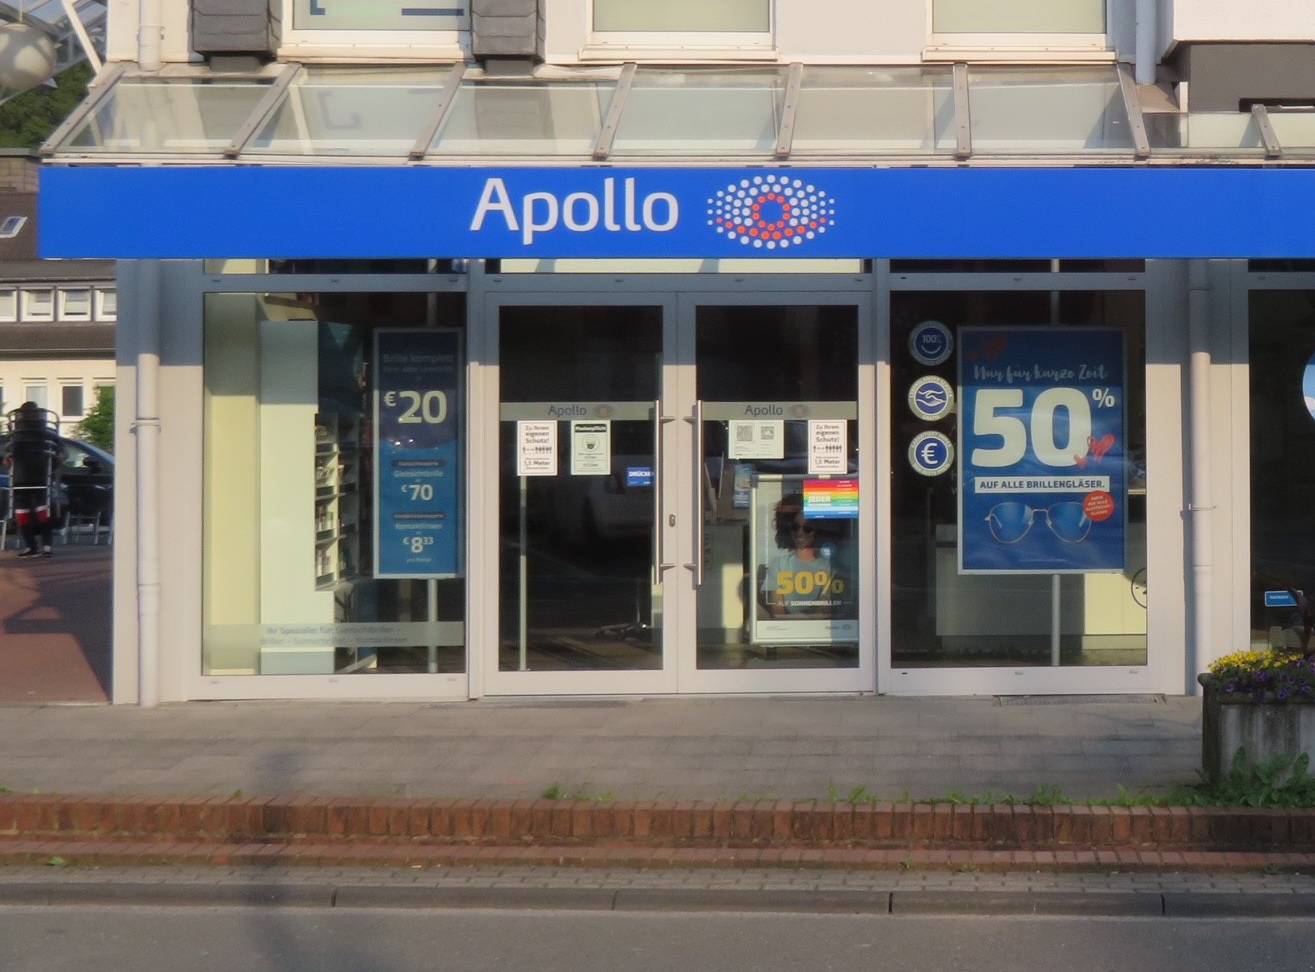 Apollo feiert 5-jähriges Jubiläum in Wuppertal